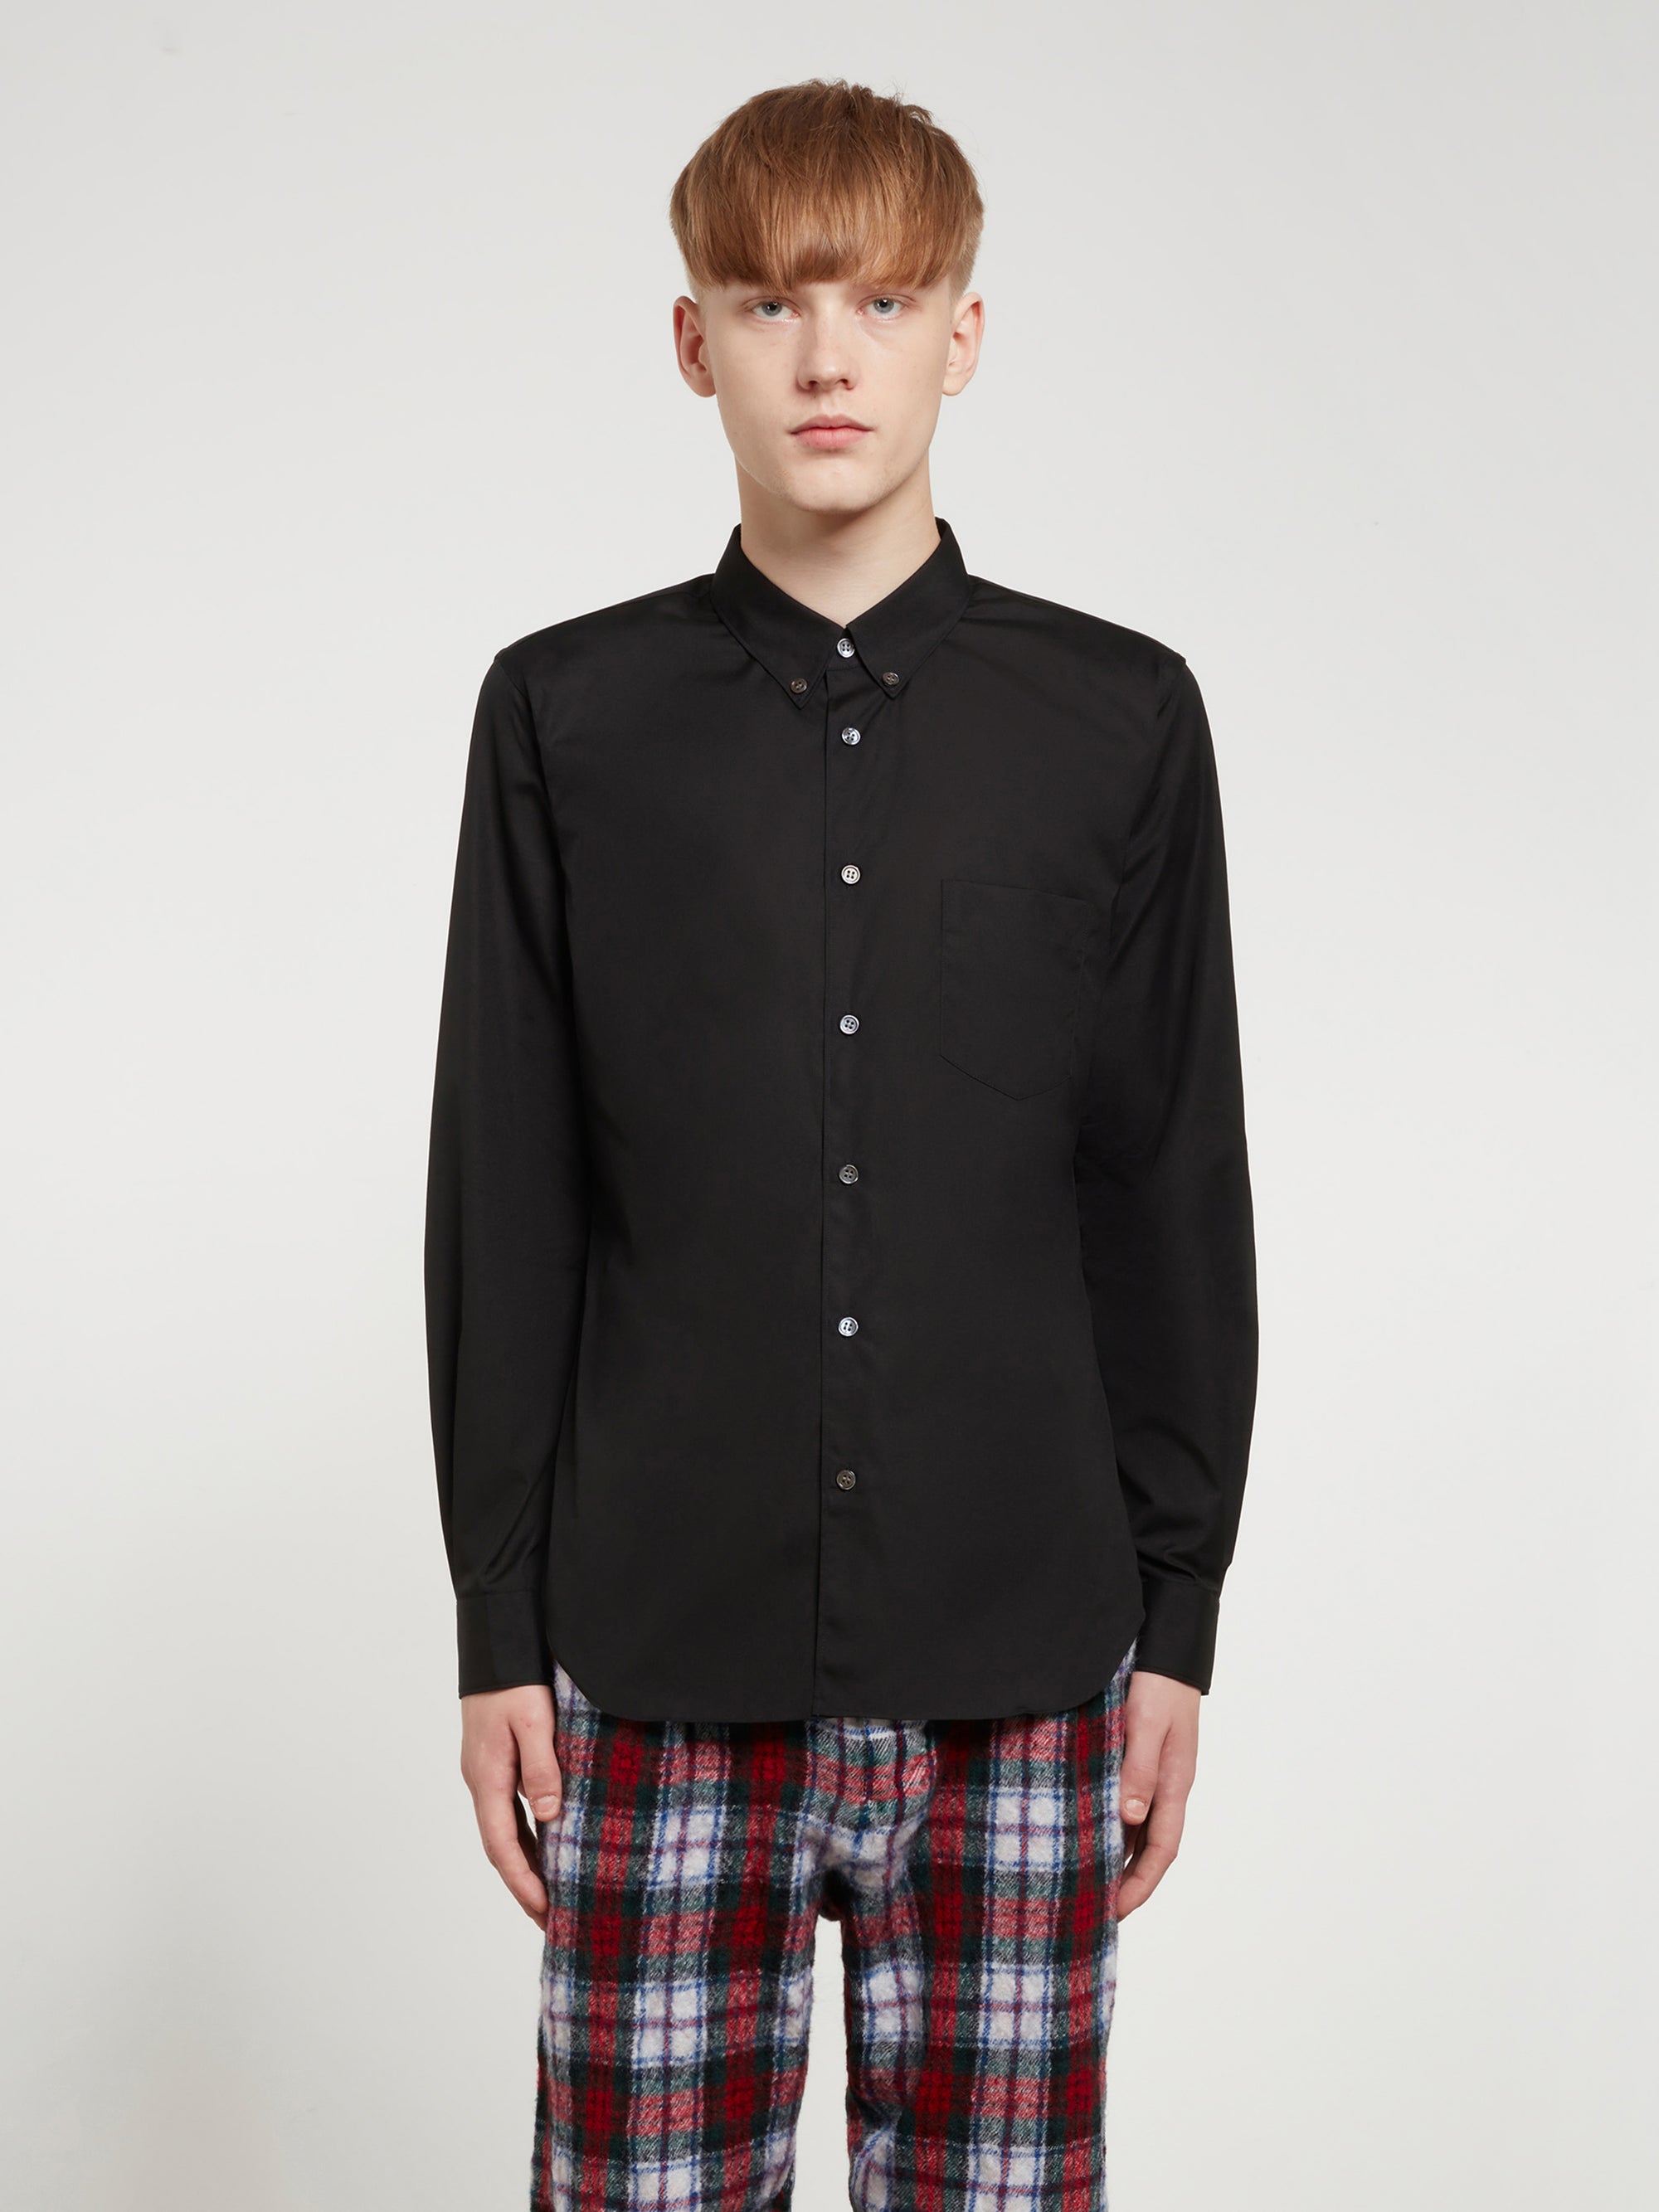 CDG Shirt Forever - Slim Fit Button-Down Cotton Shirt - (Black) view 2